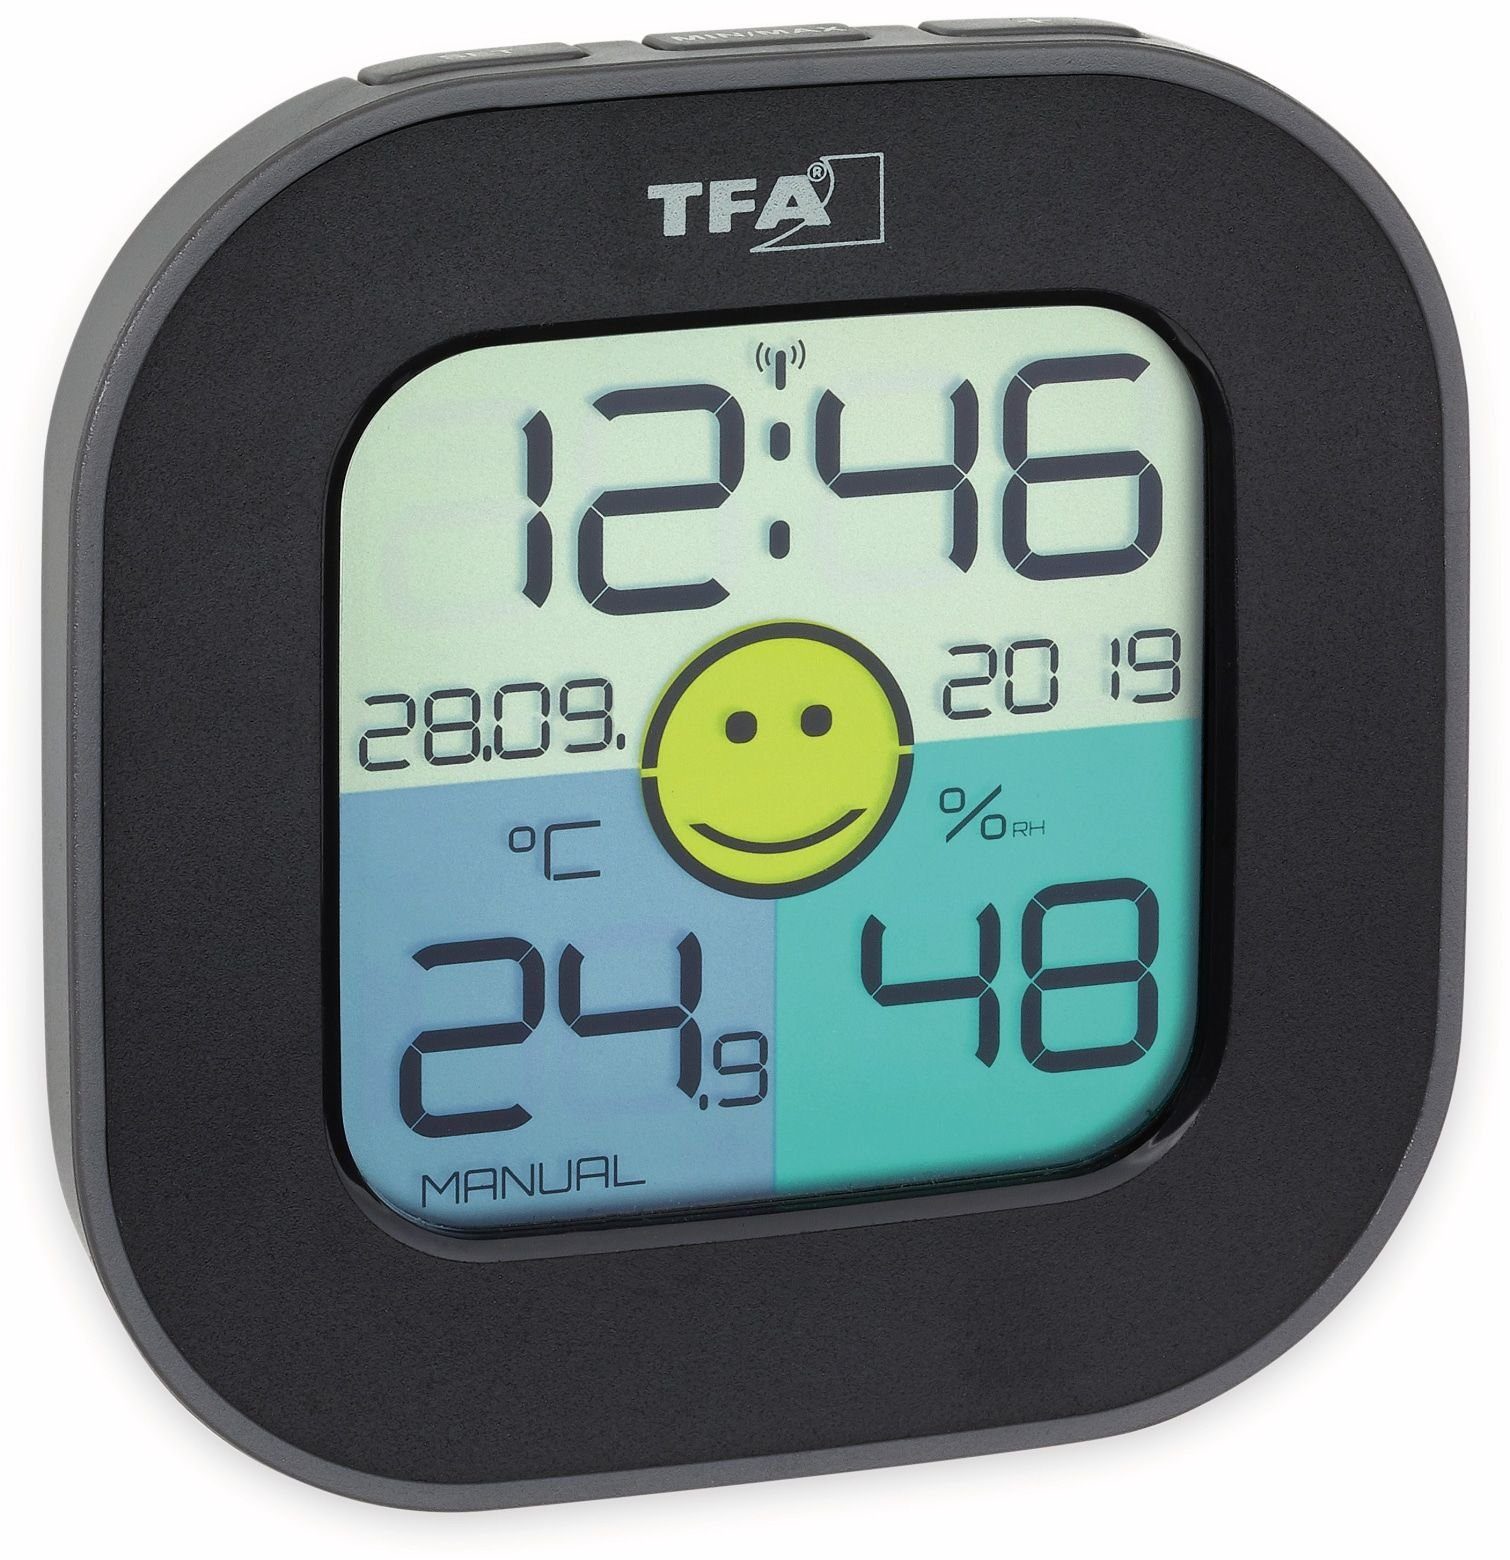 TFA Dostmann Badethermometer Thermo-Hygrometer 30.5050.01 schwarz Digitales TFA Tfa Fun